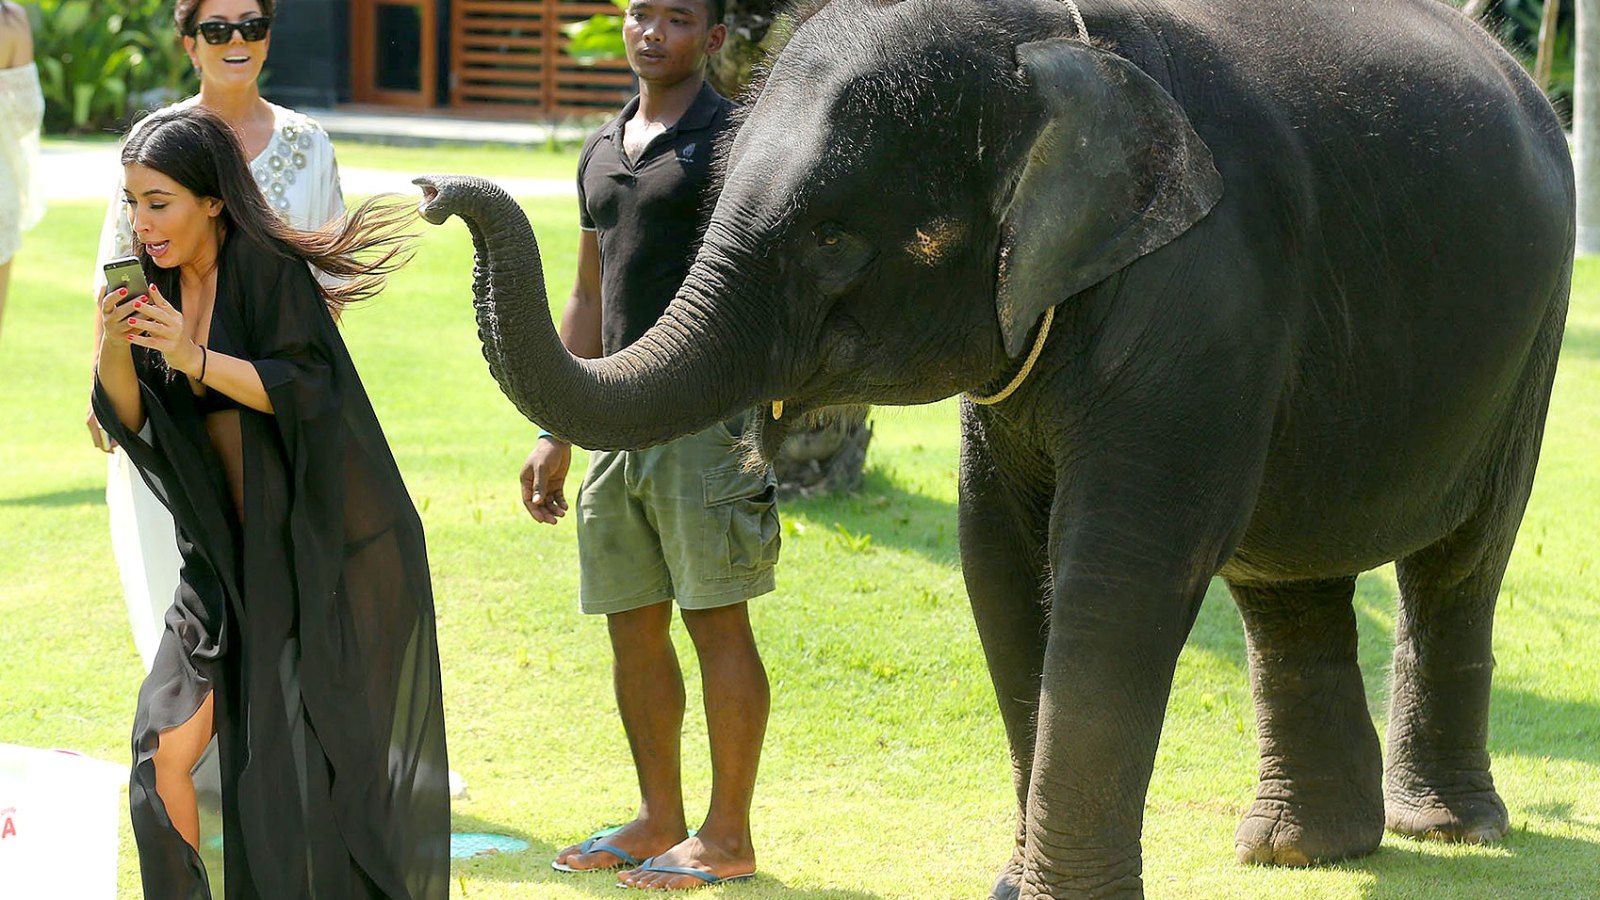 Kim Kardashian takes a selfie with an elephant in Thailand